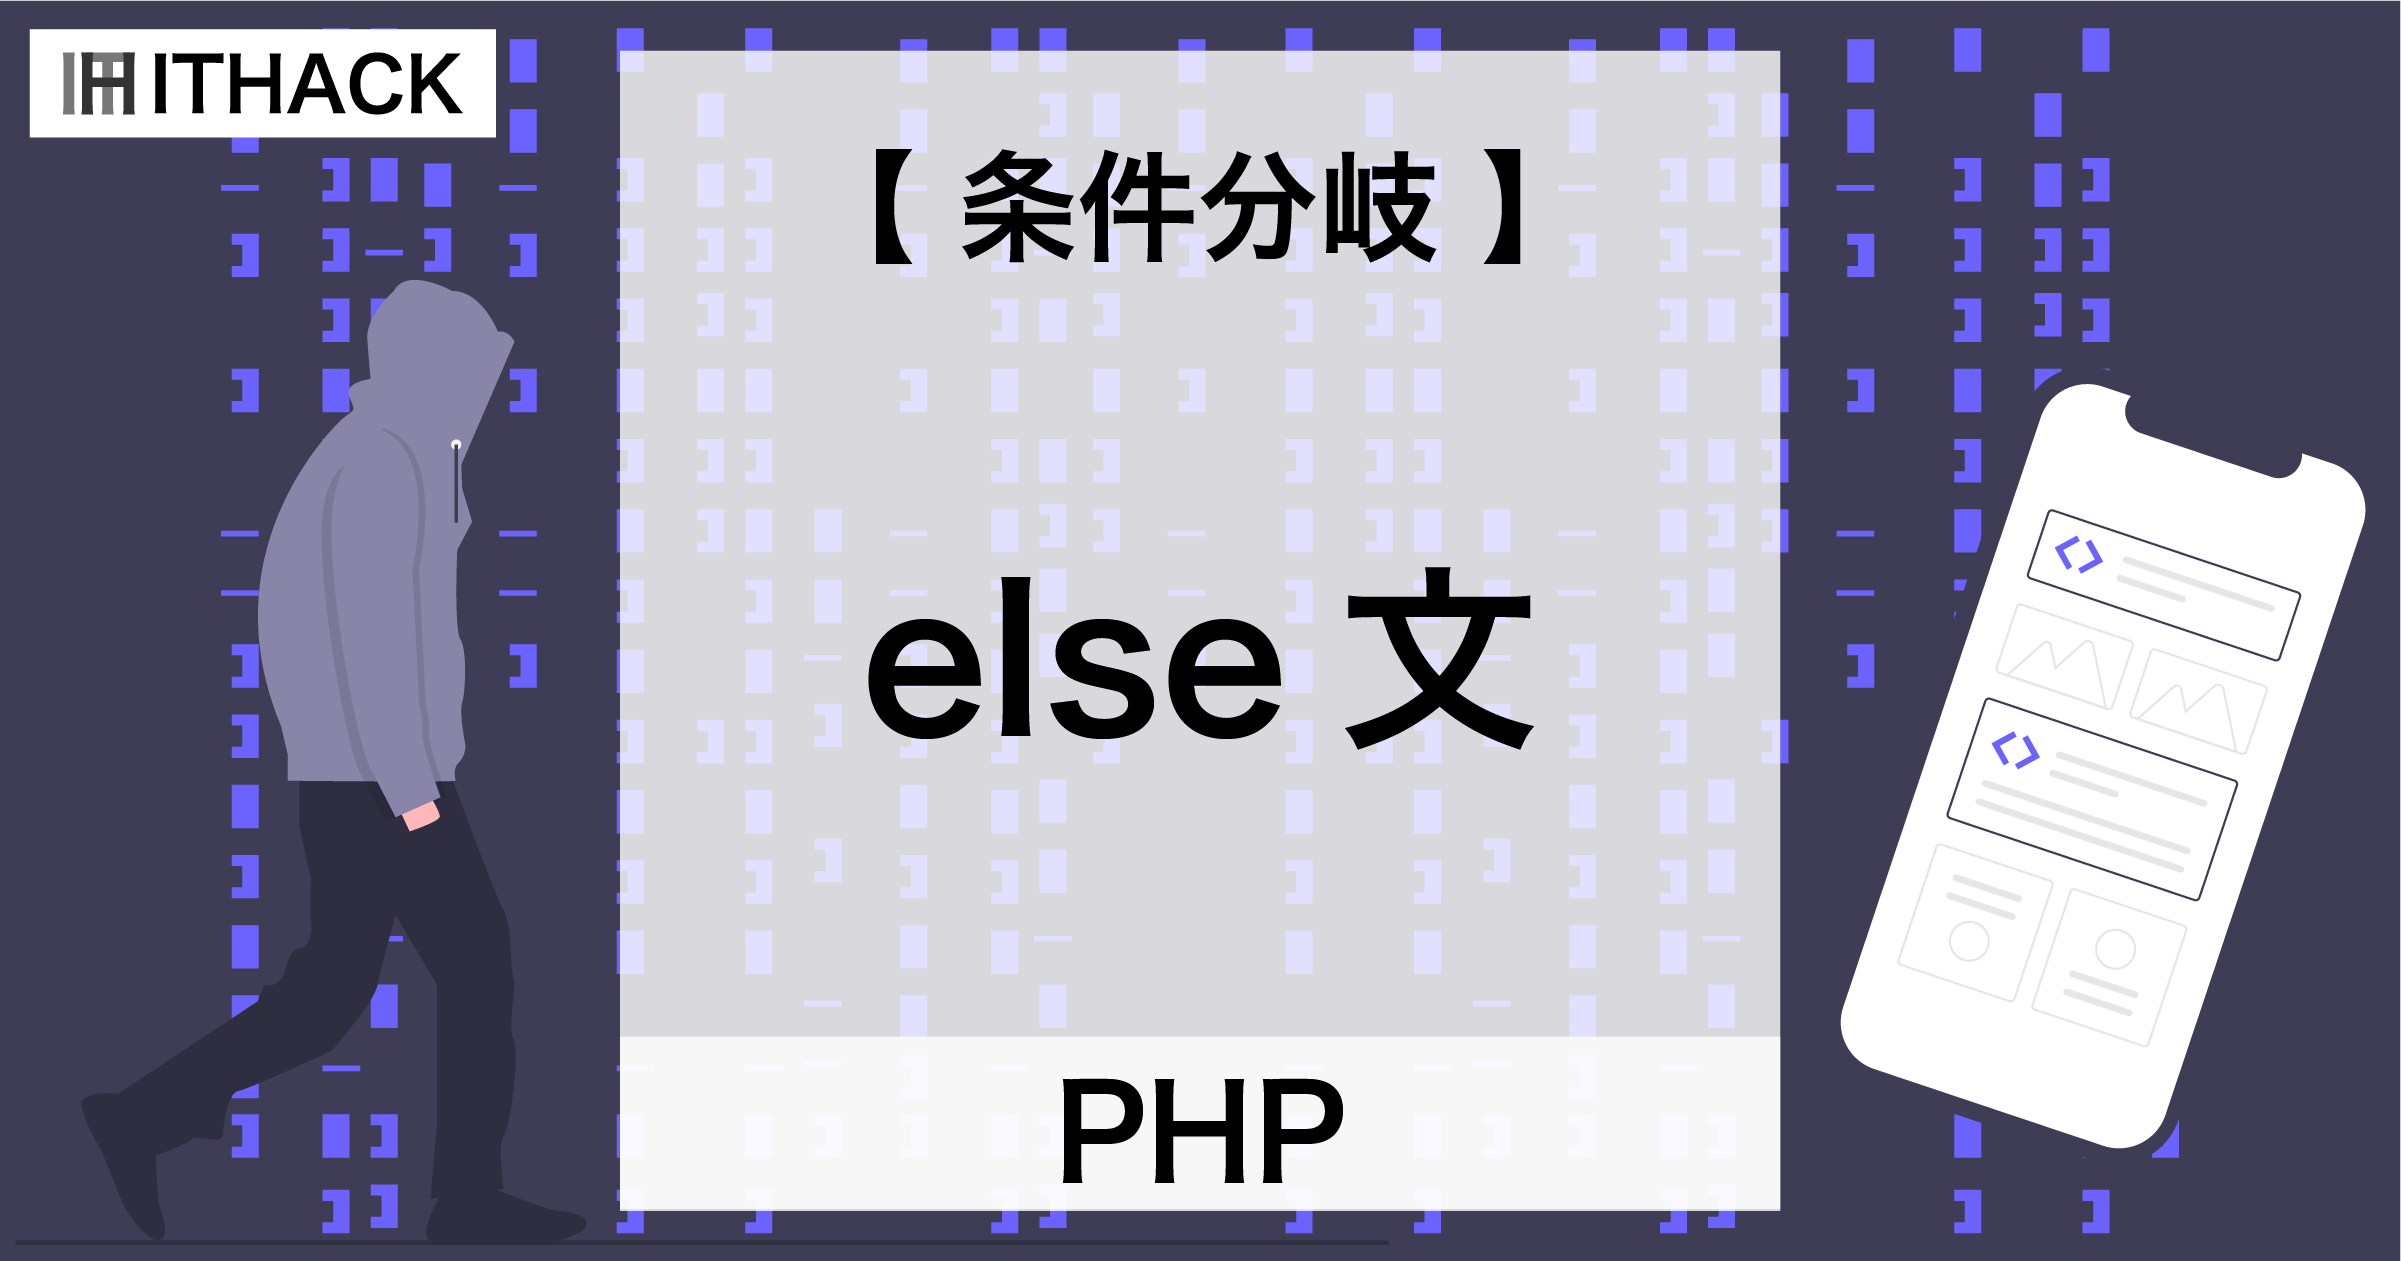 【PHP】else文 - 条件分岐 / if-elseifの分岐に当てはまらない場合の分岐処理